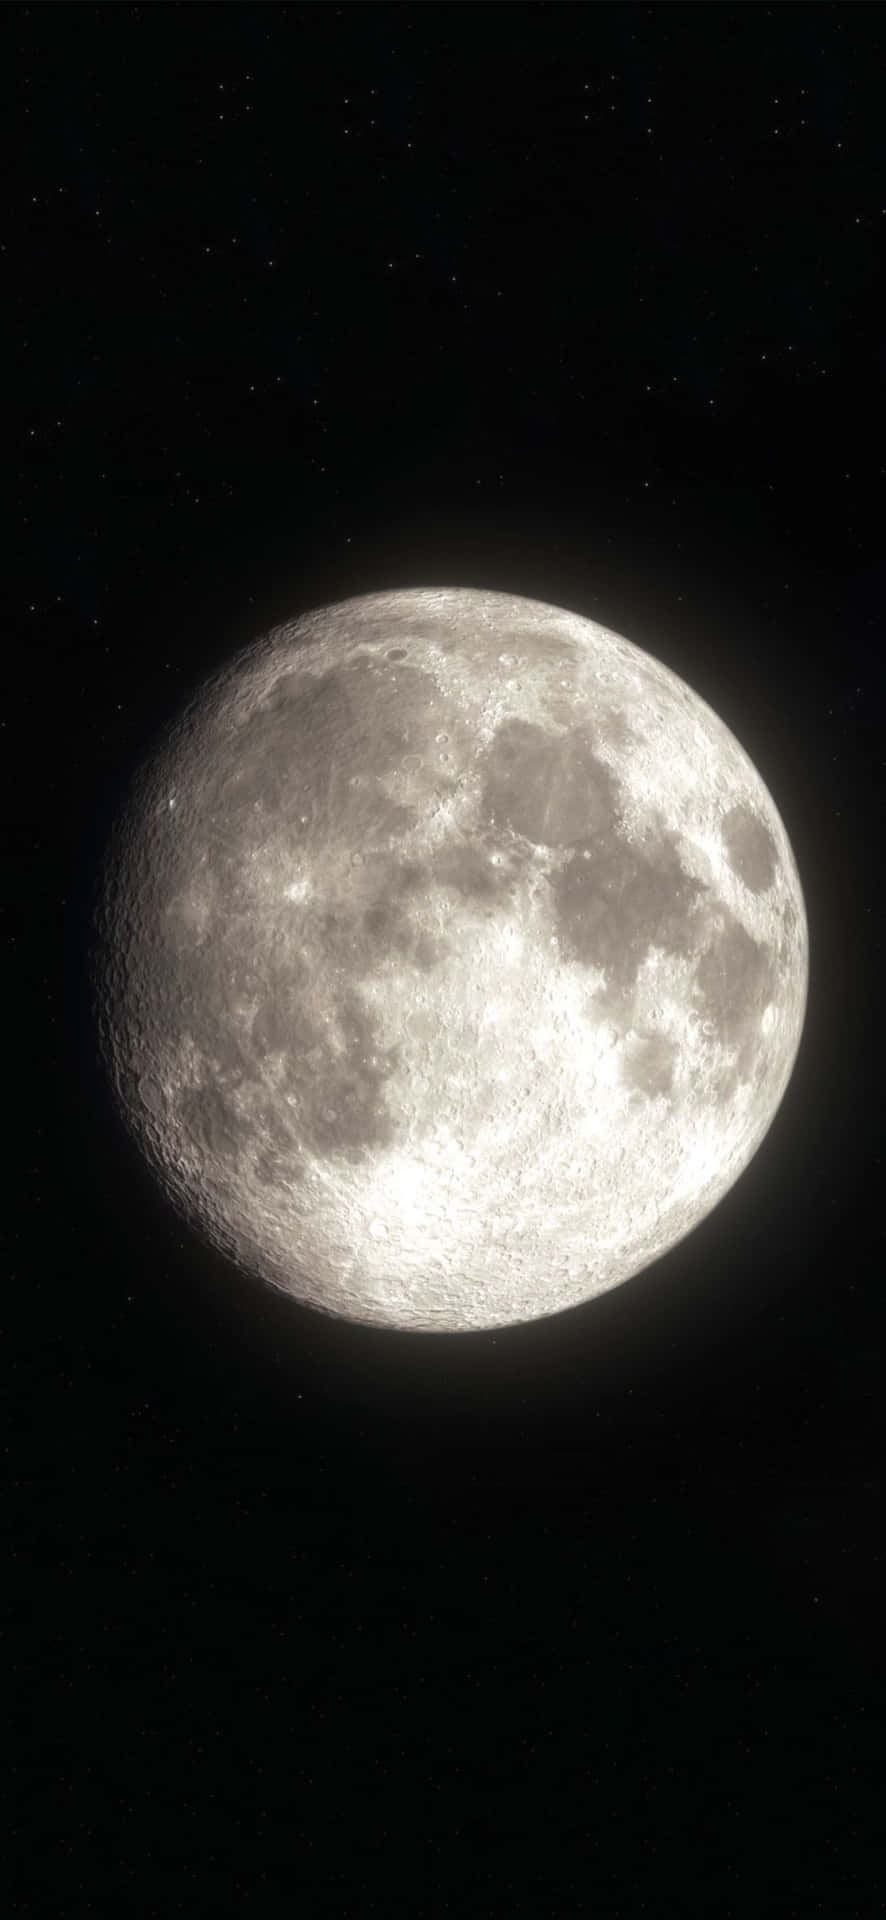 Illuminating Moon over a Dark Landscape - Shot on iPhone Wallpaper